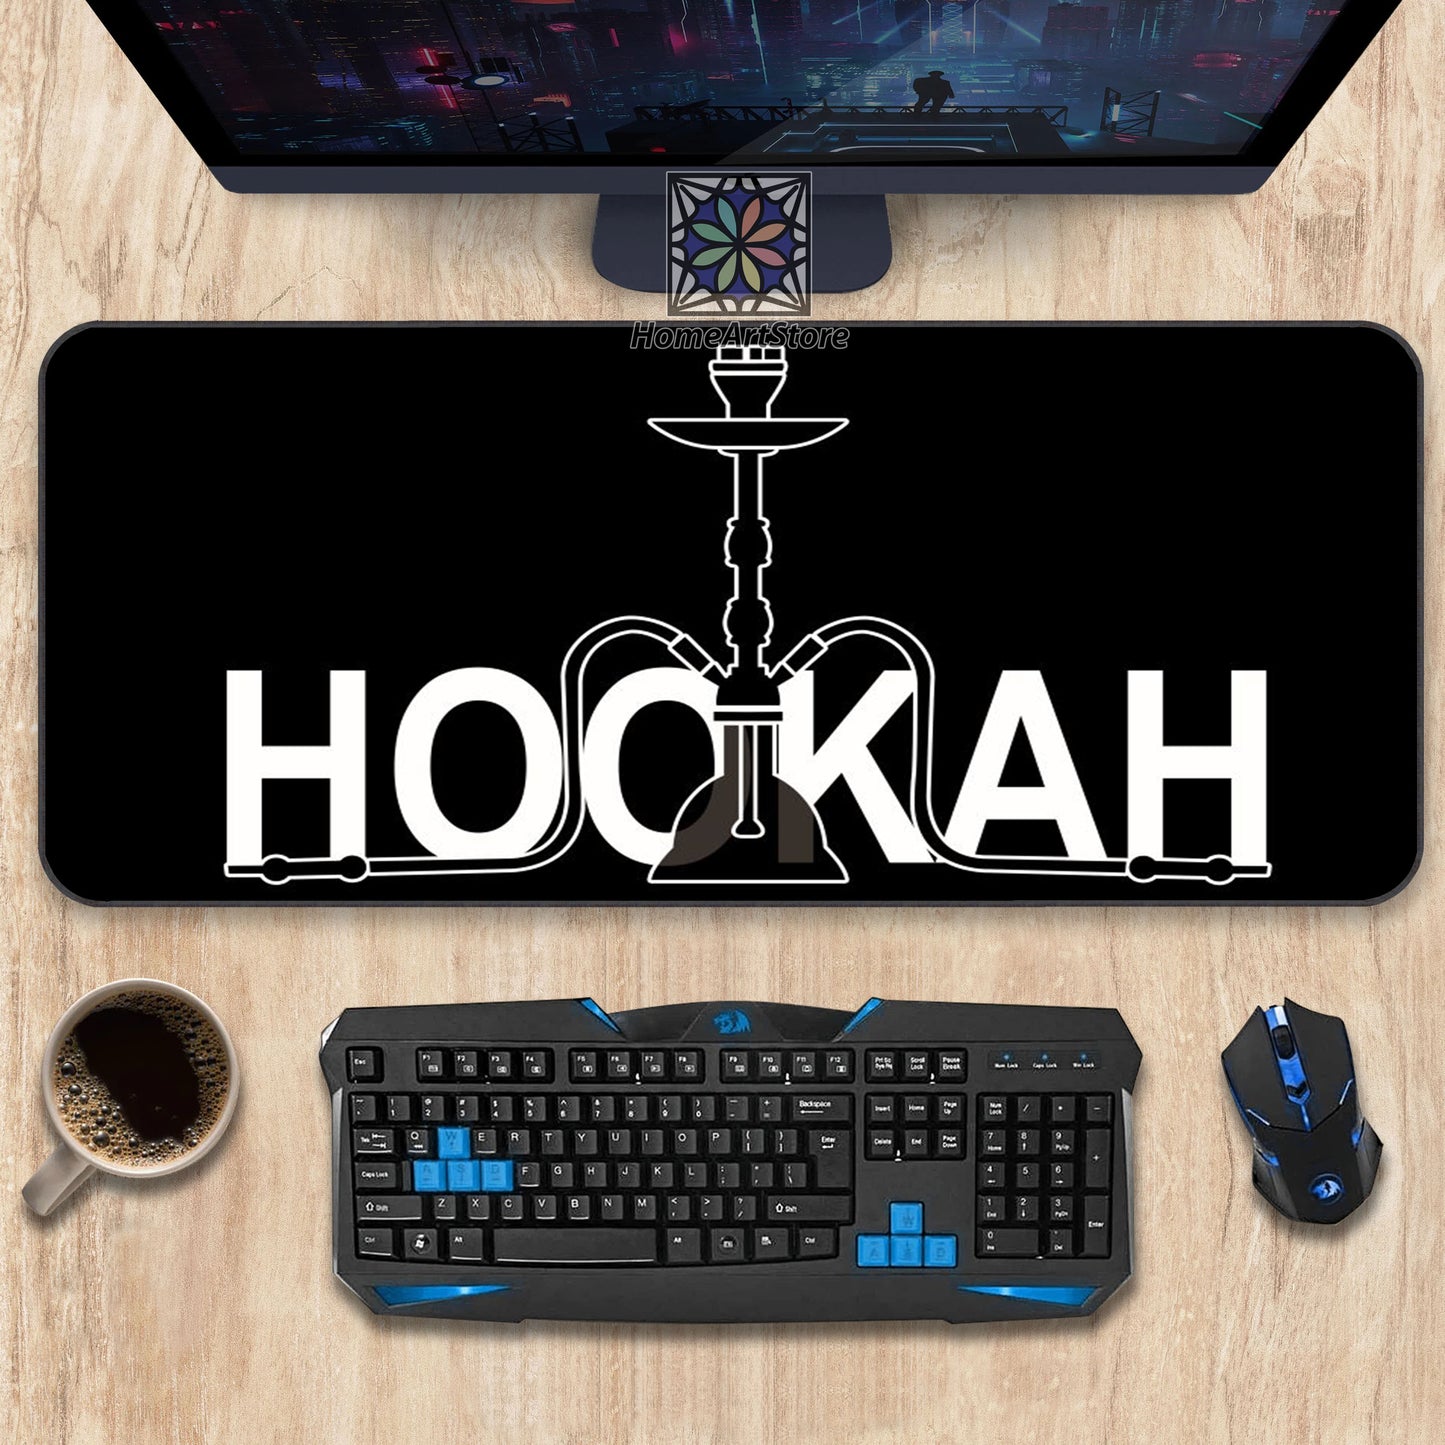 Hookah Printed Desk Mat, Black Decorative Desk Pad, Cafe Hookah Mouse Mat, Cool Office Ultra Large Mouse Pad, Office Gift